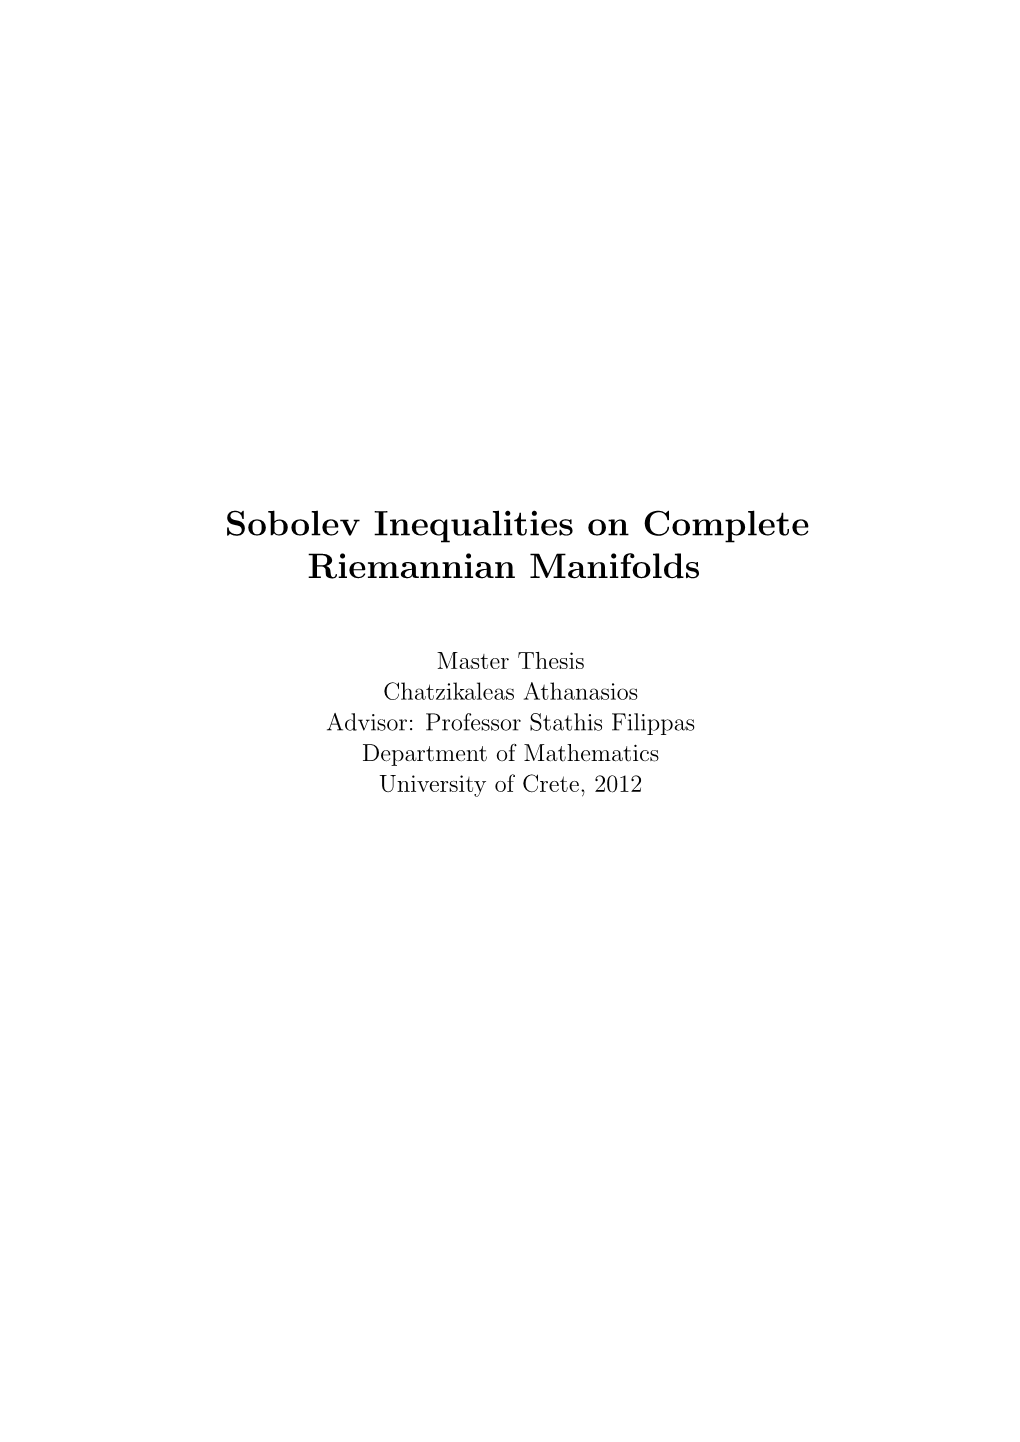 Sobolev Inequalities on Complete Riemannian Manifolds